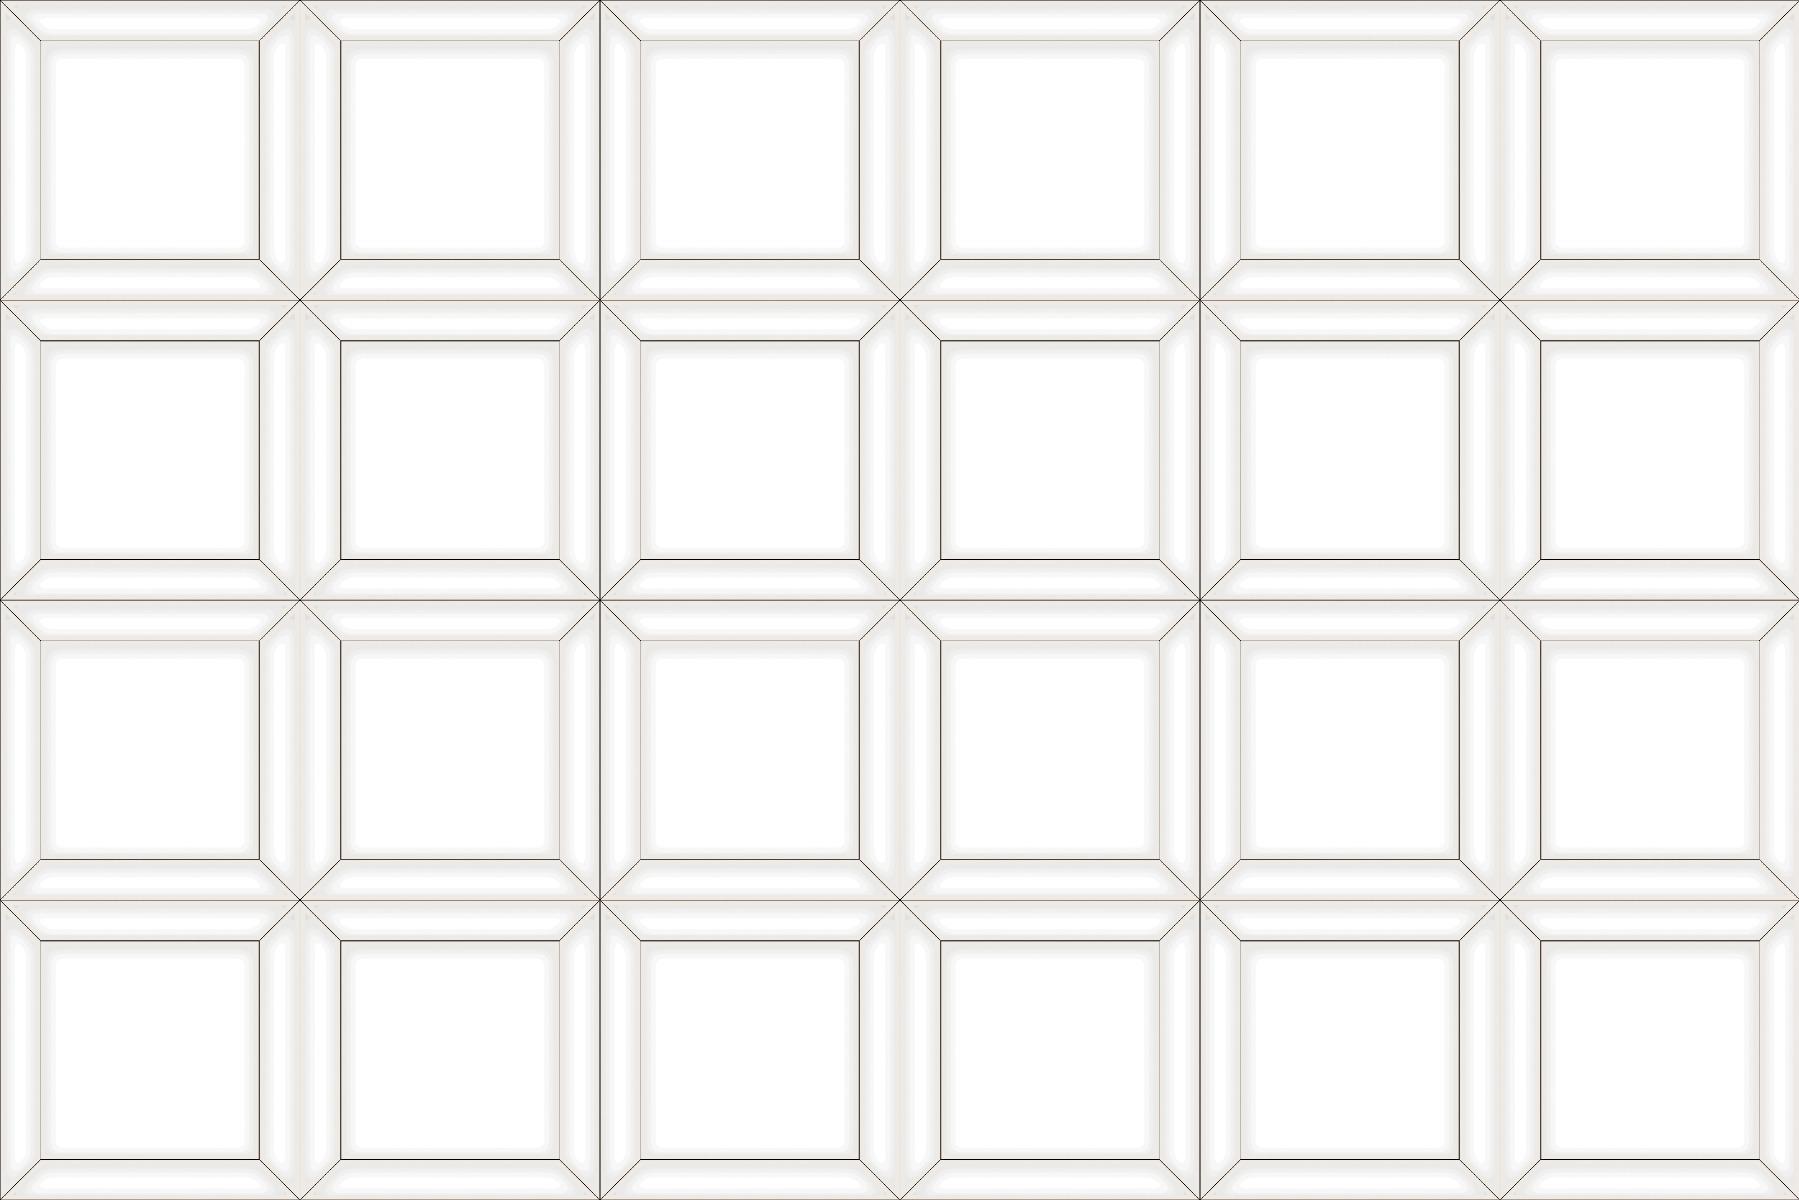 Stylized Tiles for Bathroom Tiles, Living Room Tiles, Accent Tiles